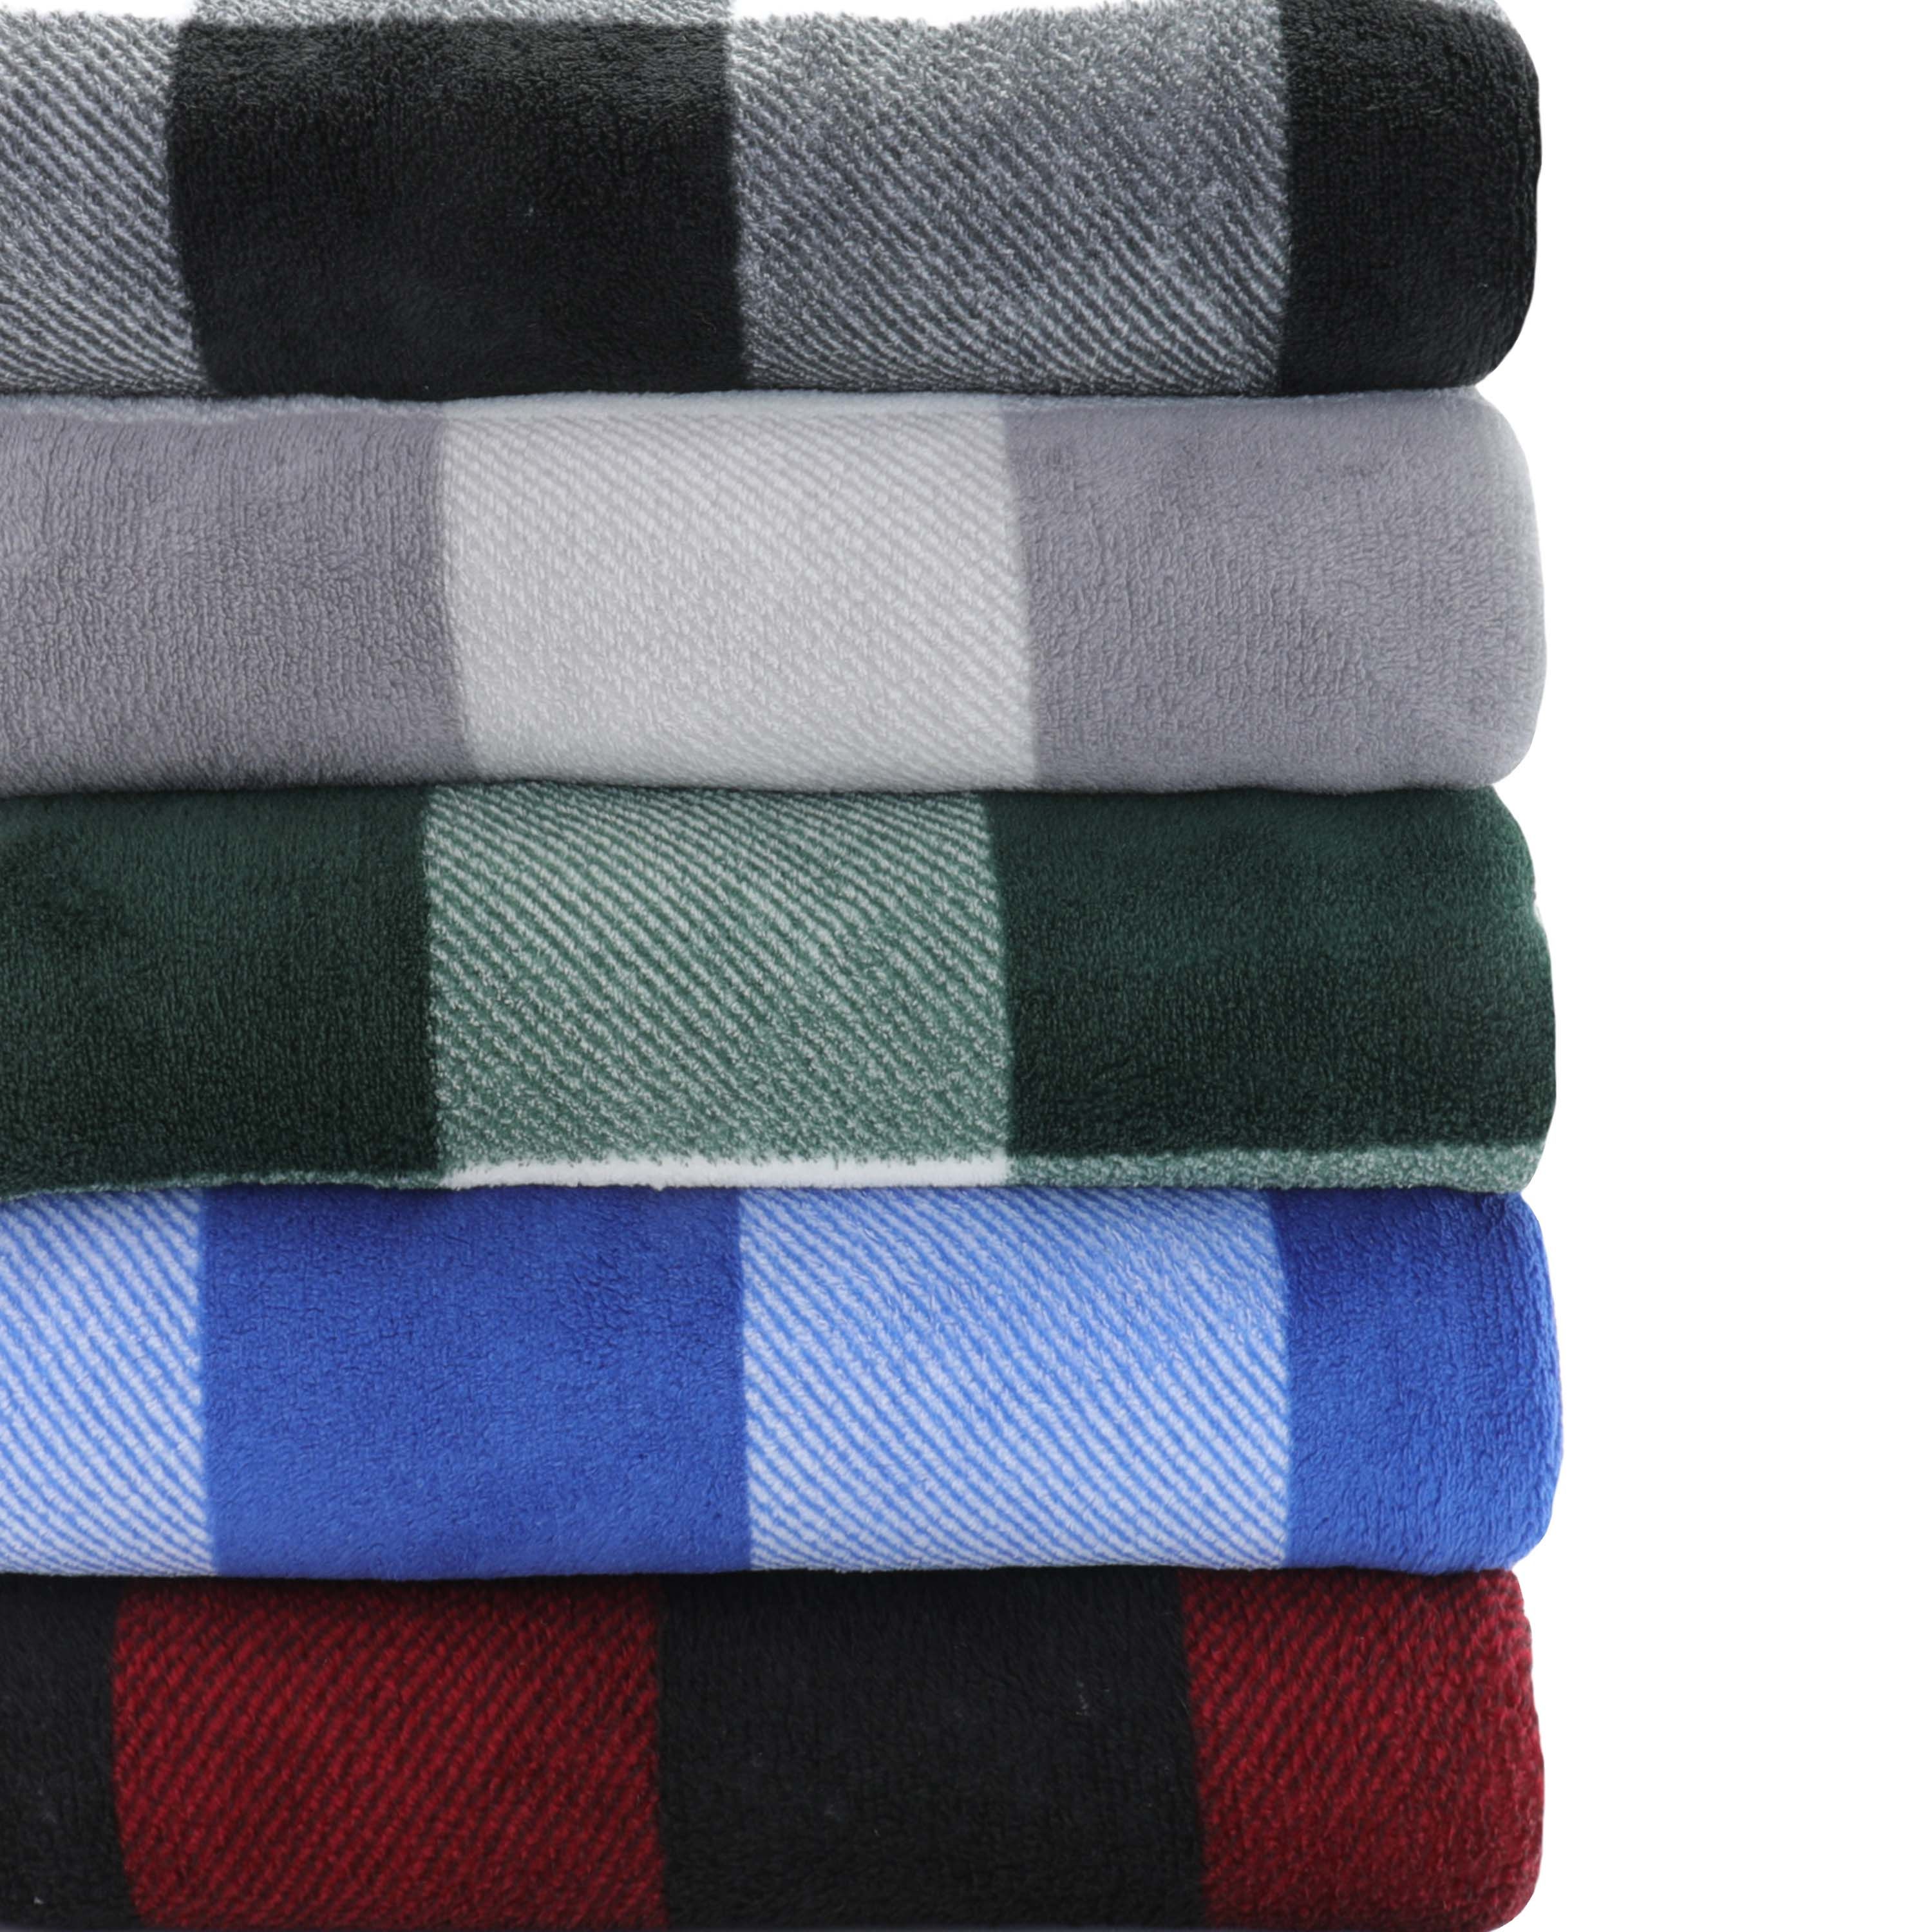 Mainstays Fleece Plush Throw Blanket, 50" x 60", Black Plaid, 2-Pack | Walmart (US)